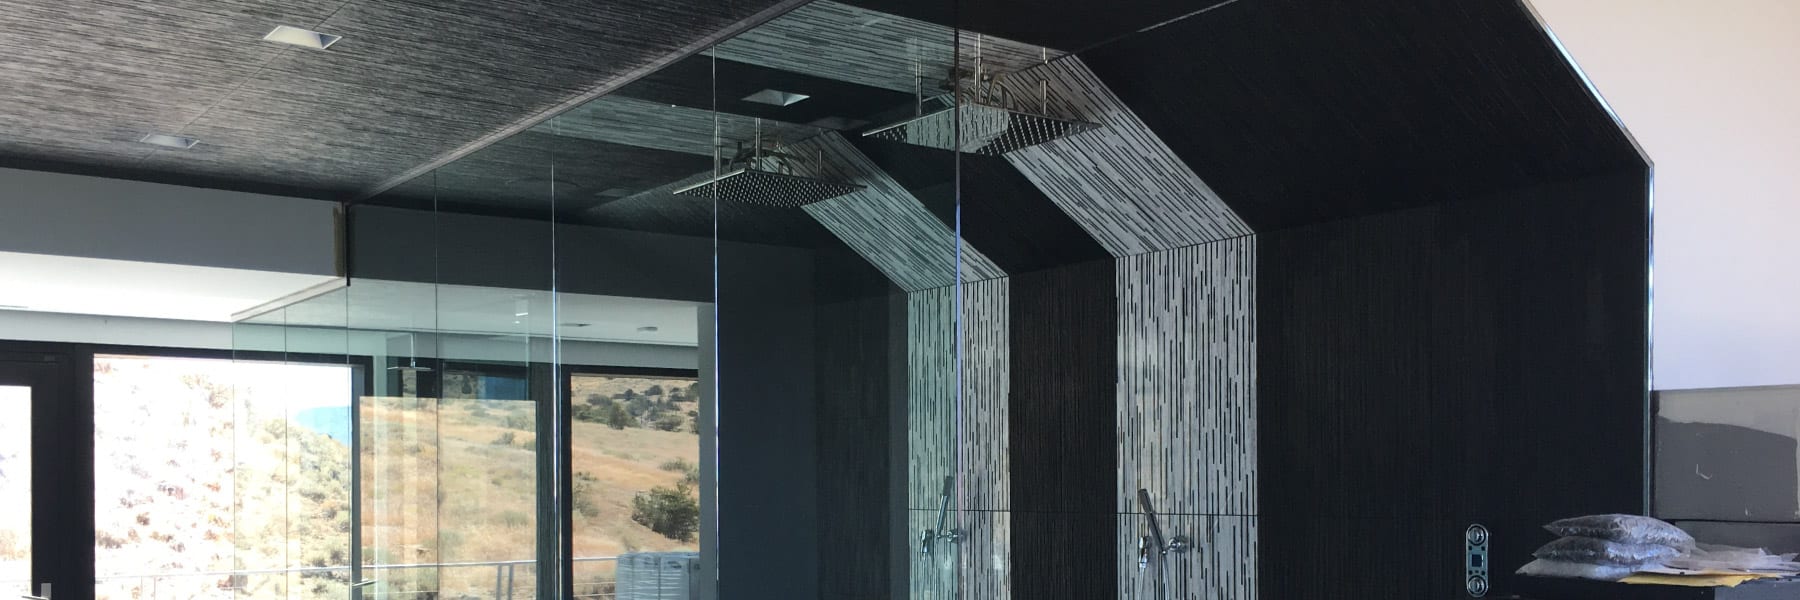 Custom Shower Room Mirrors, shower glass doors